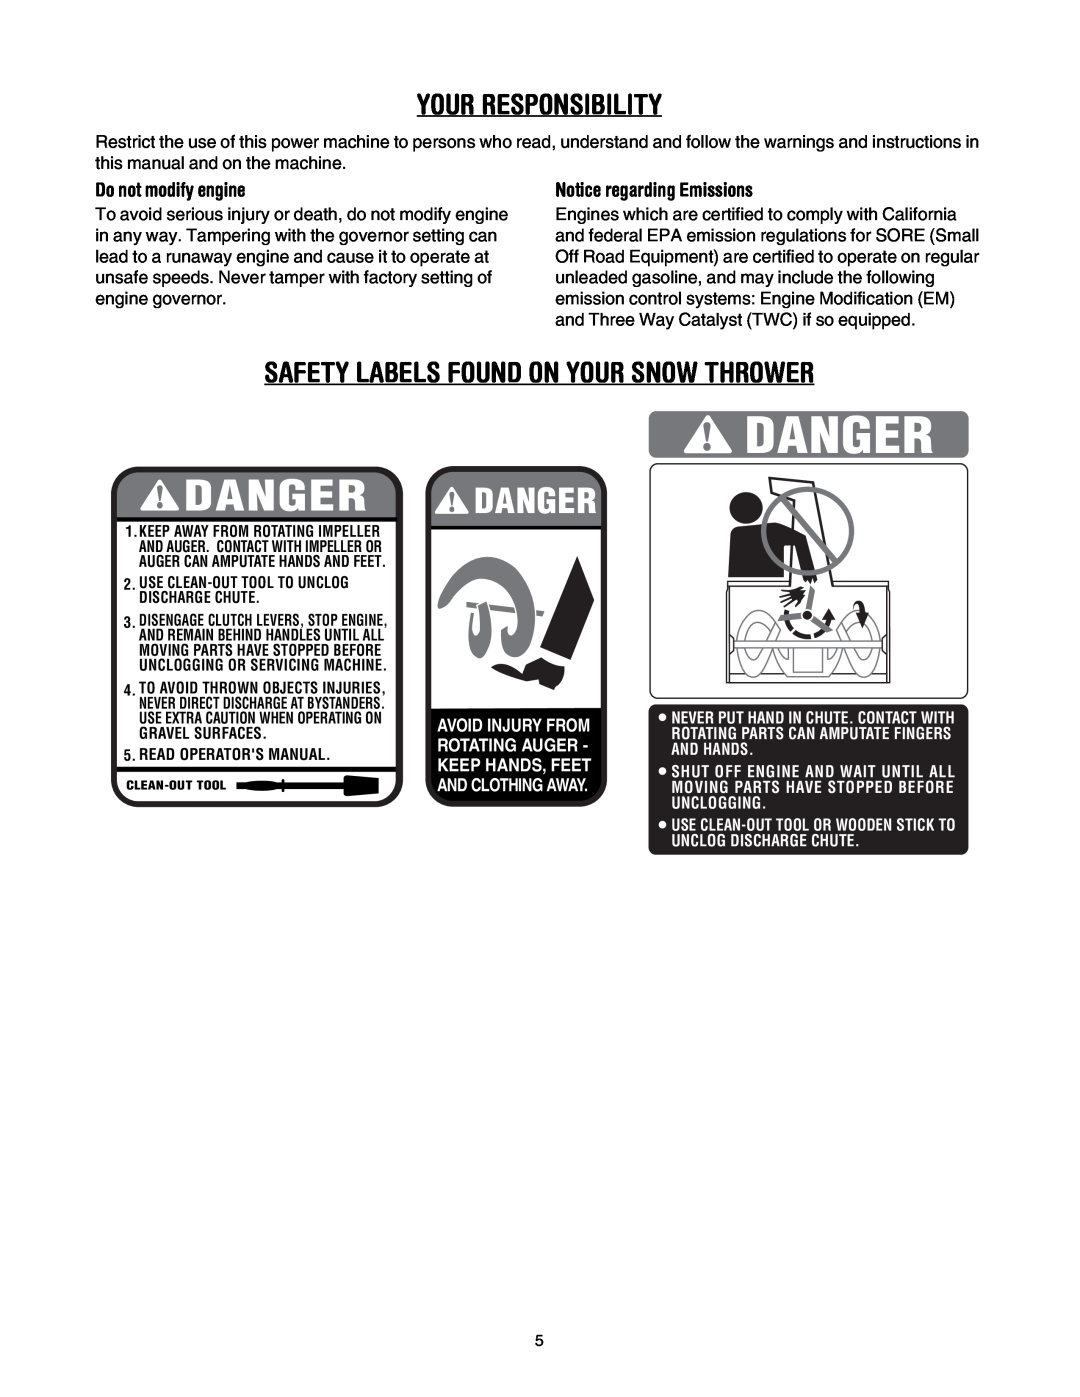 MTD 6DE manual Danger, Do not modify engine, Notice regarding Emissions 